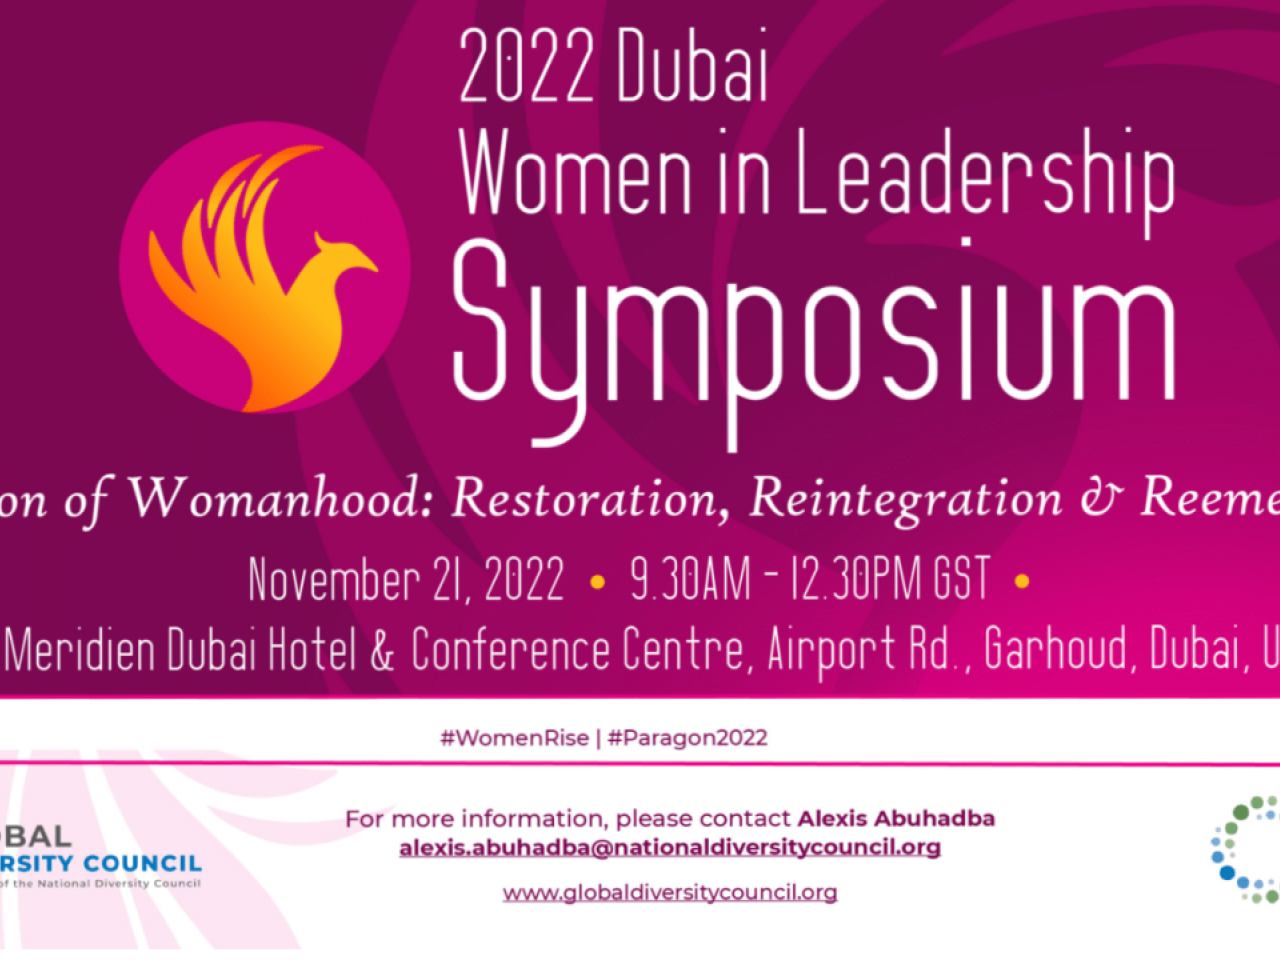 Women in Leadership Symposium flyer